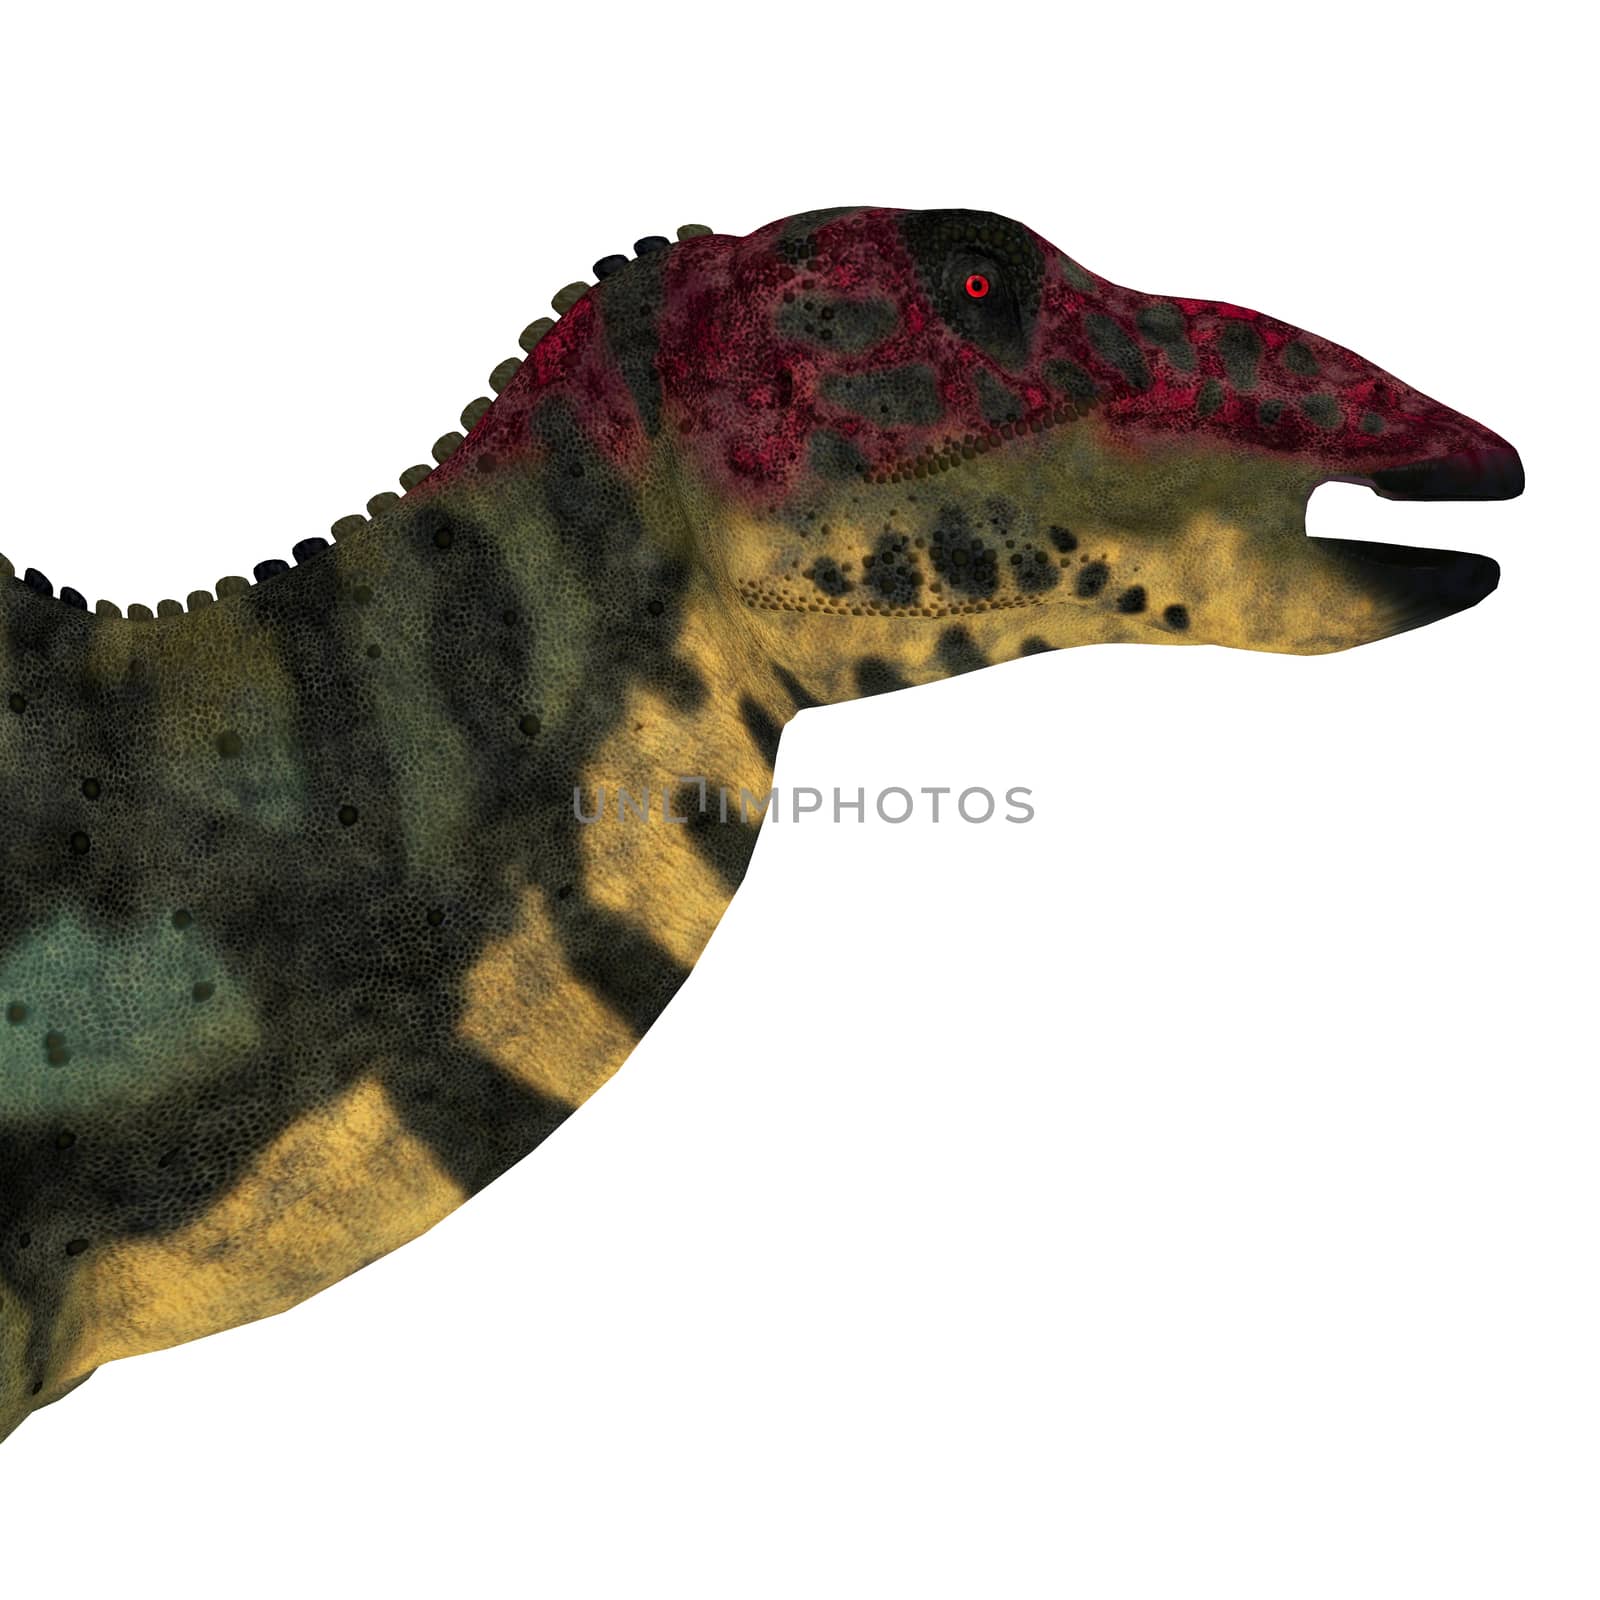 Shuangmiaosaurus Dinosaur Head by Catmando